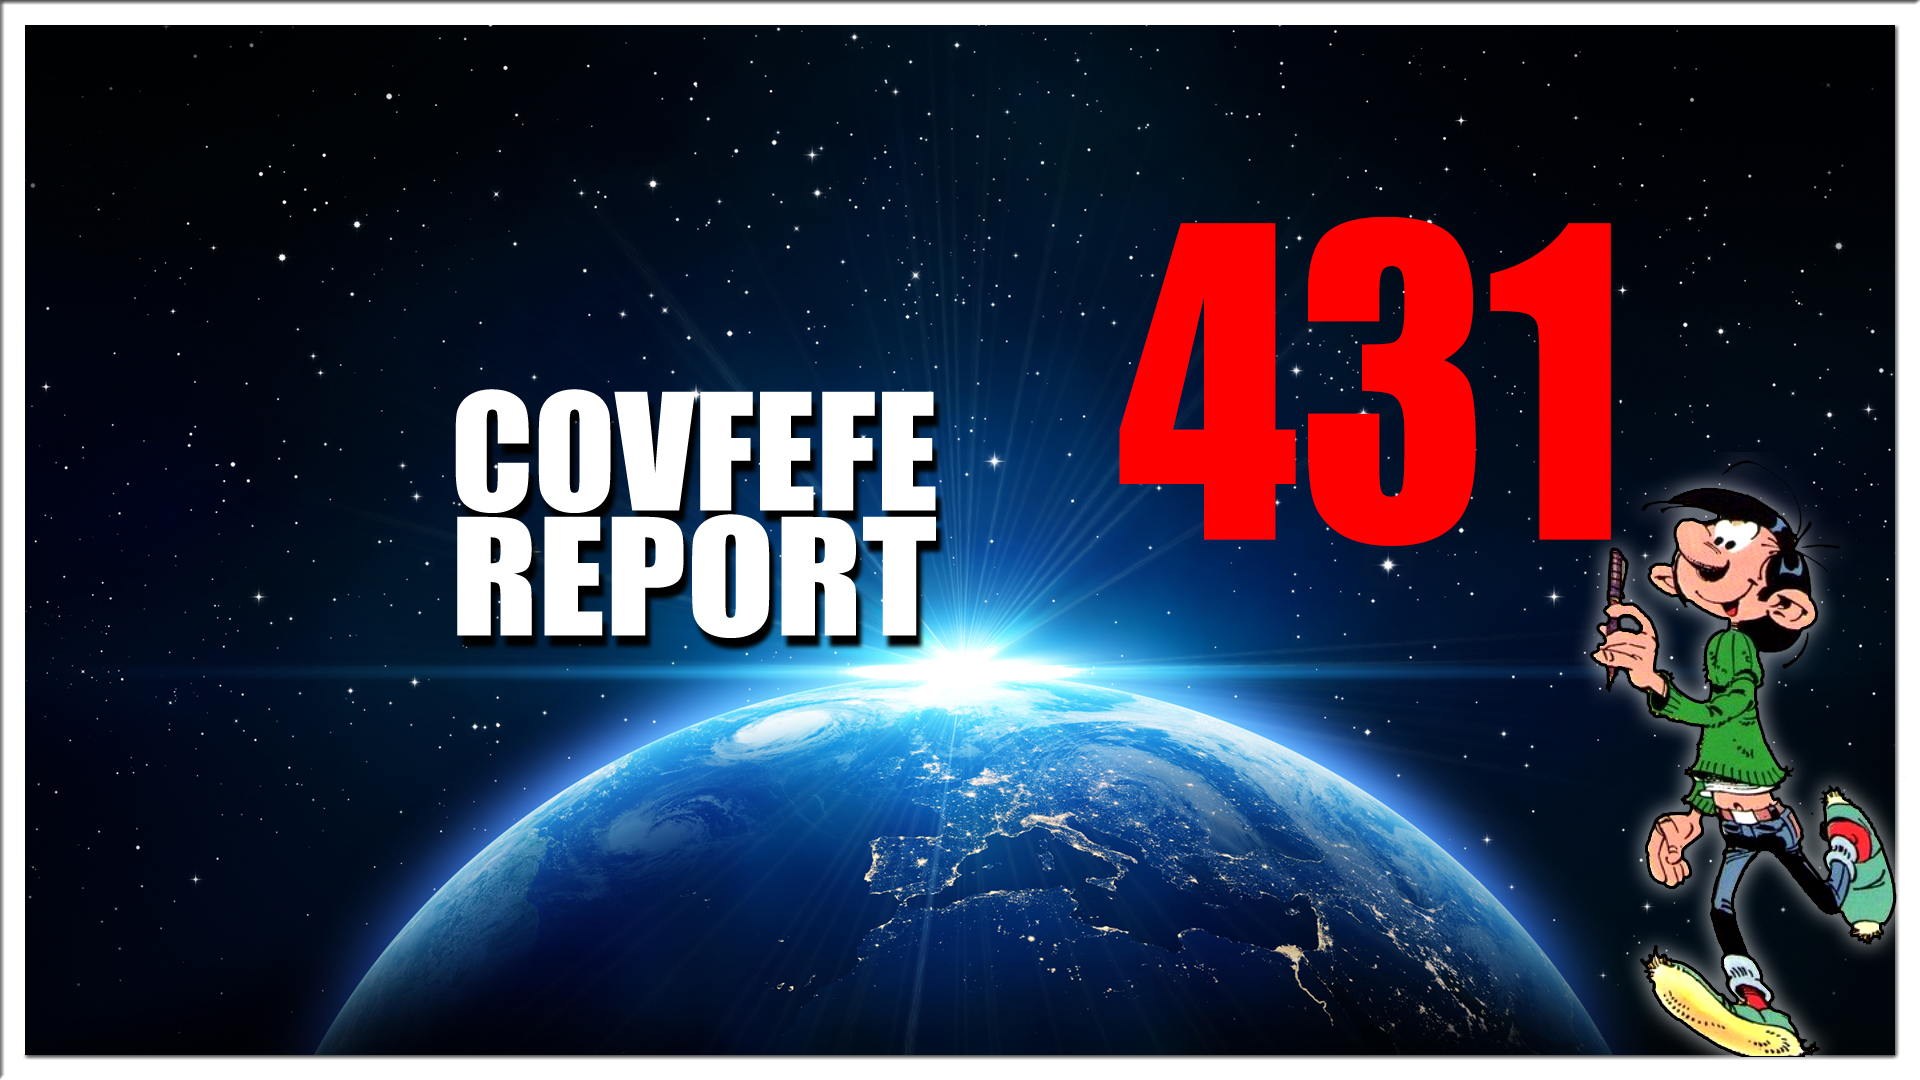 Covfefe Report 431. Police for Freedom, Marsvoor Menselijke verbinding, o7